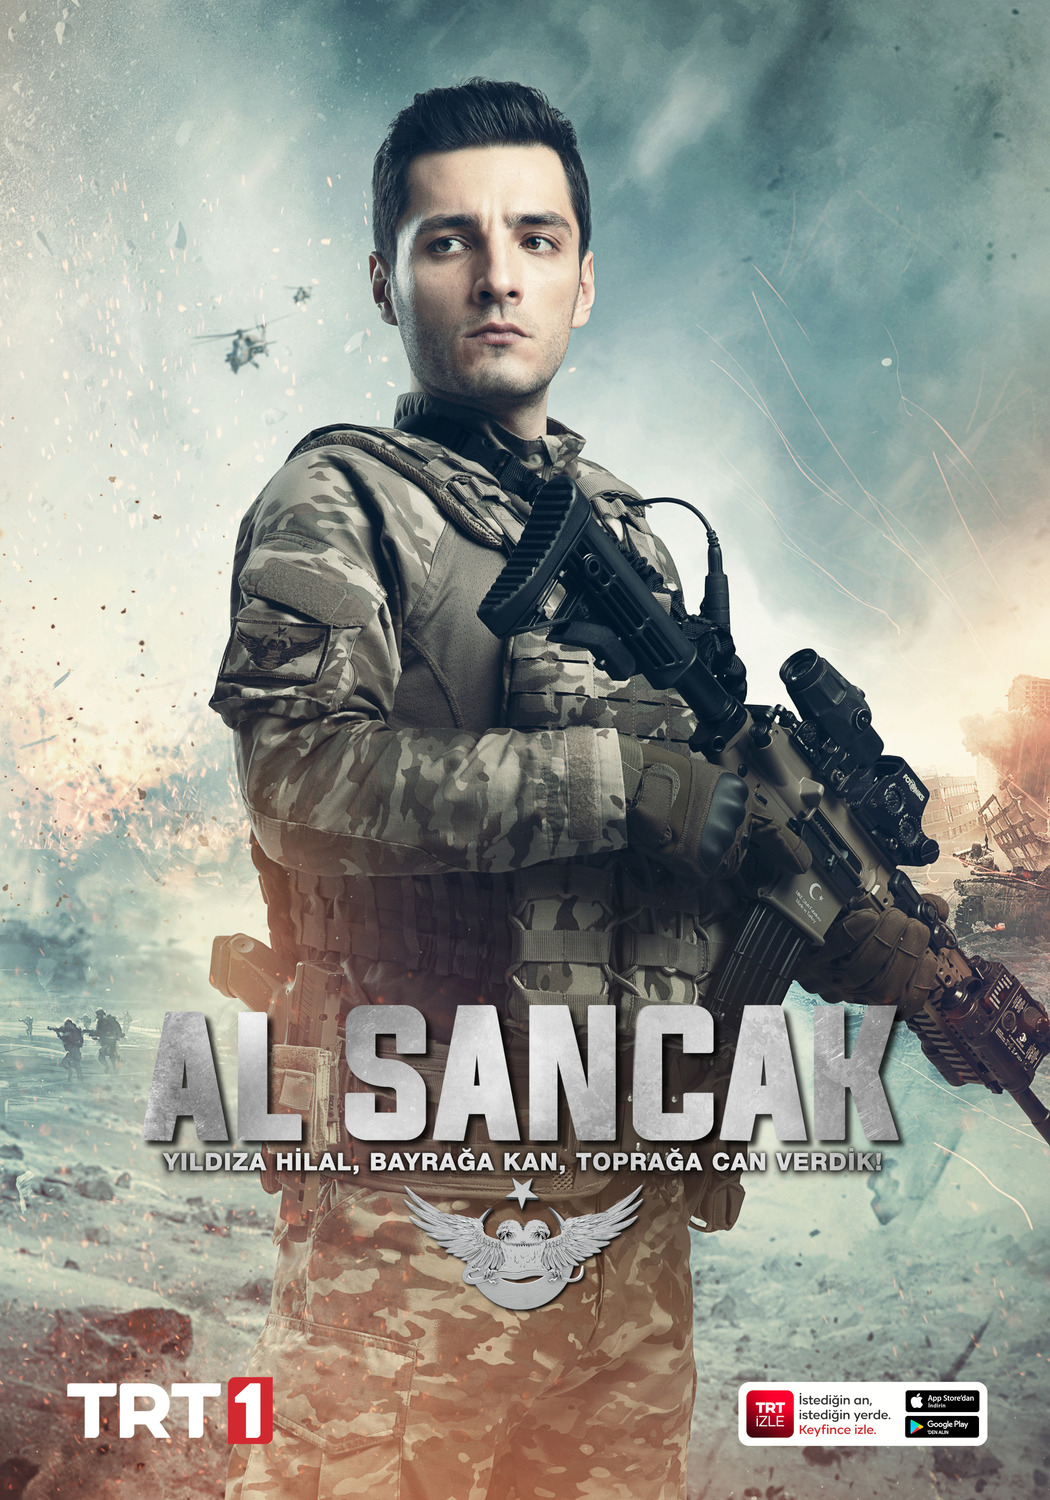 Extra Large TV Poster Image for Al Sancak (#19 of 20)